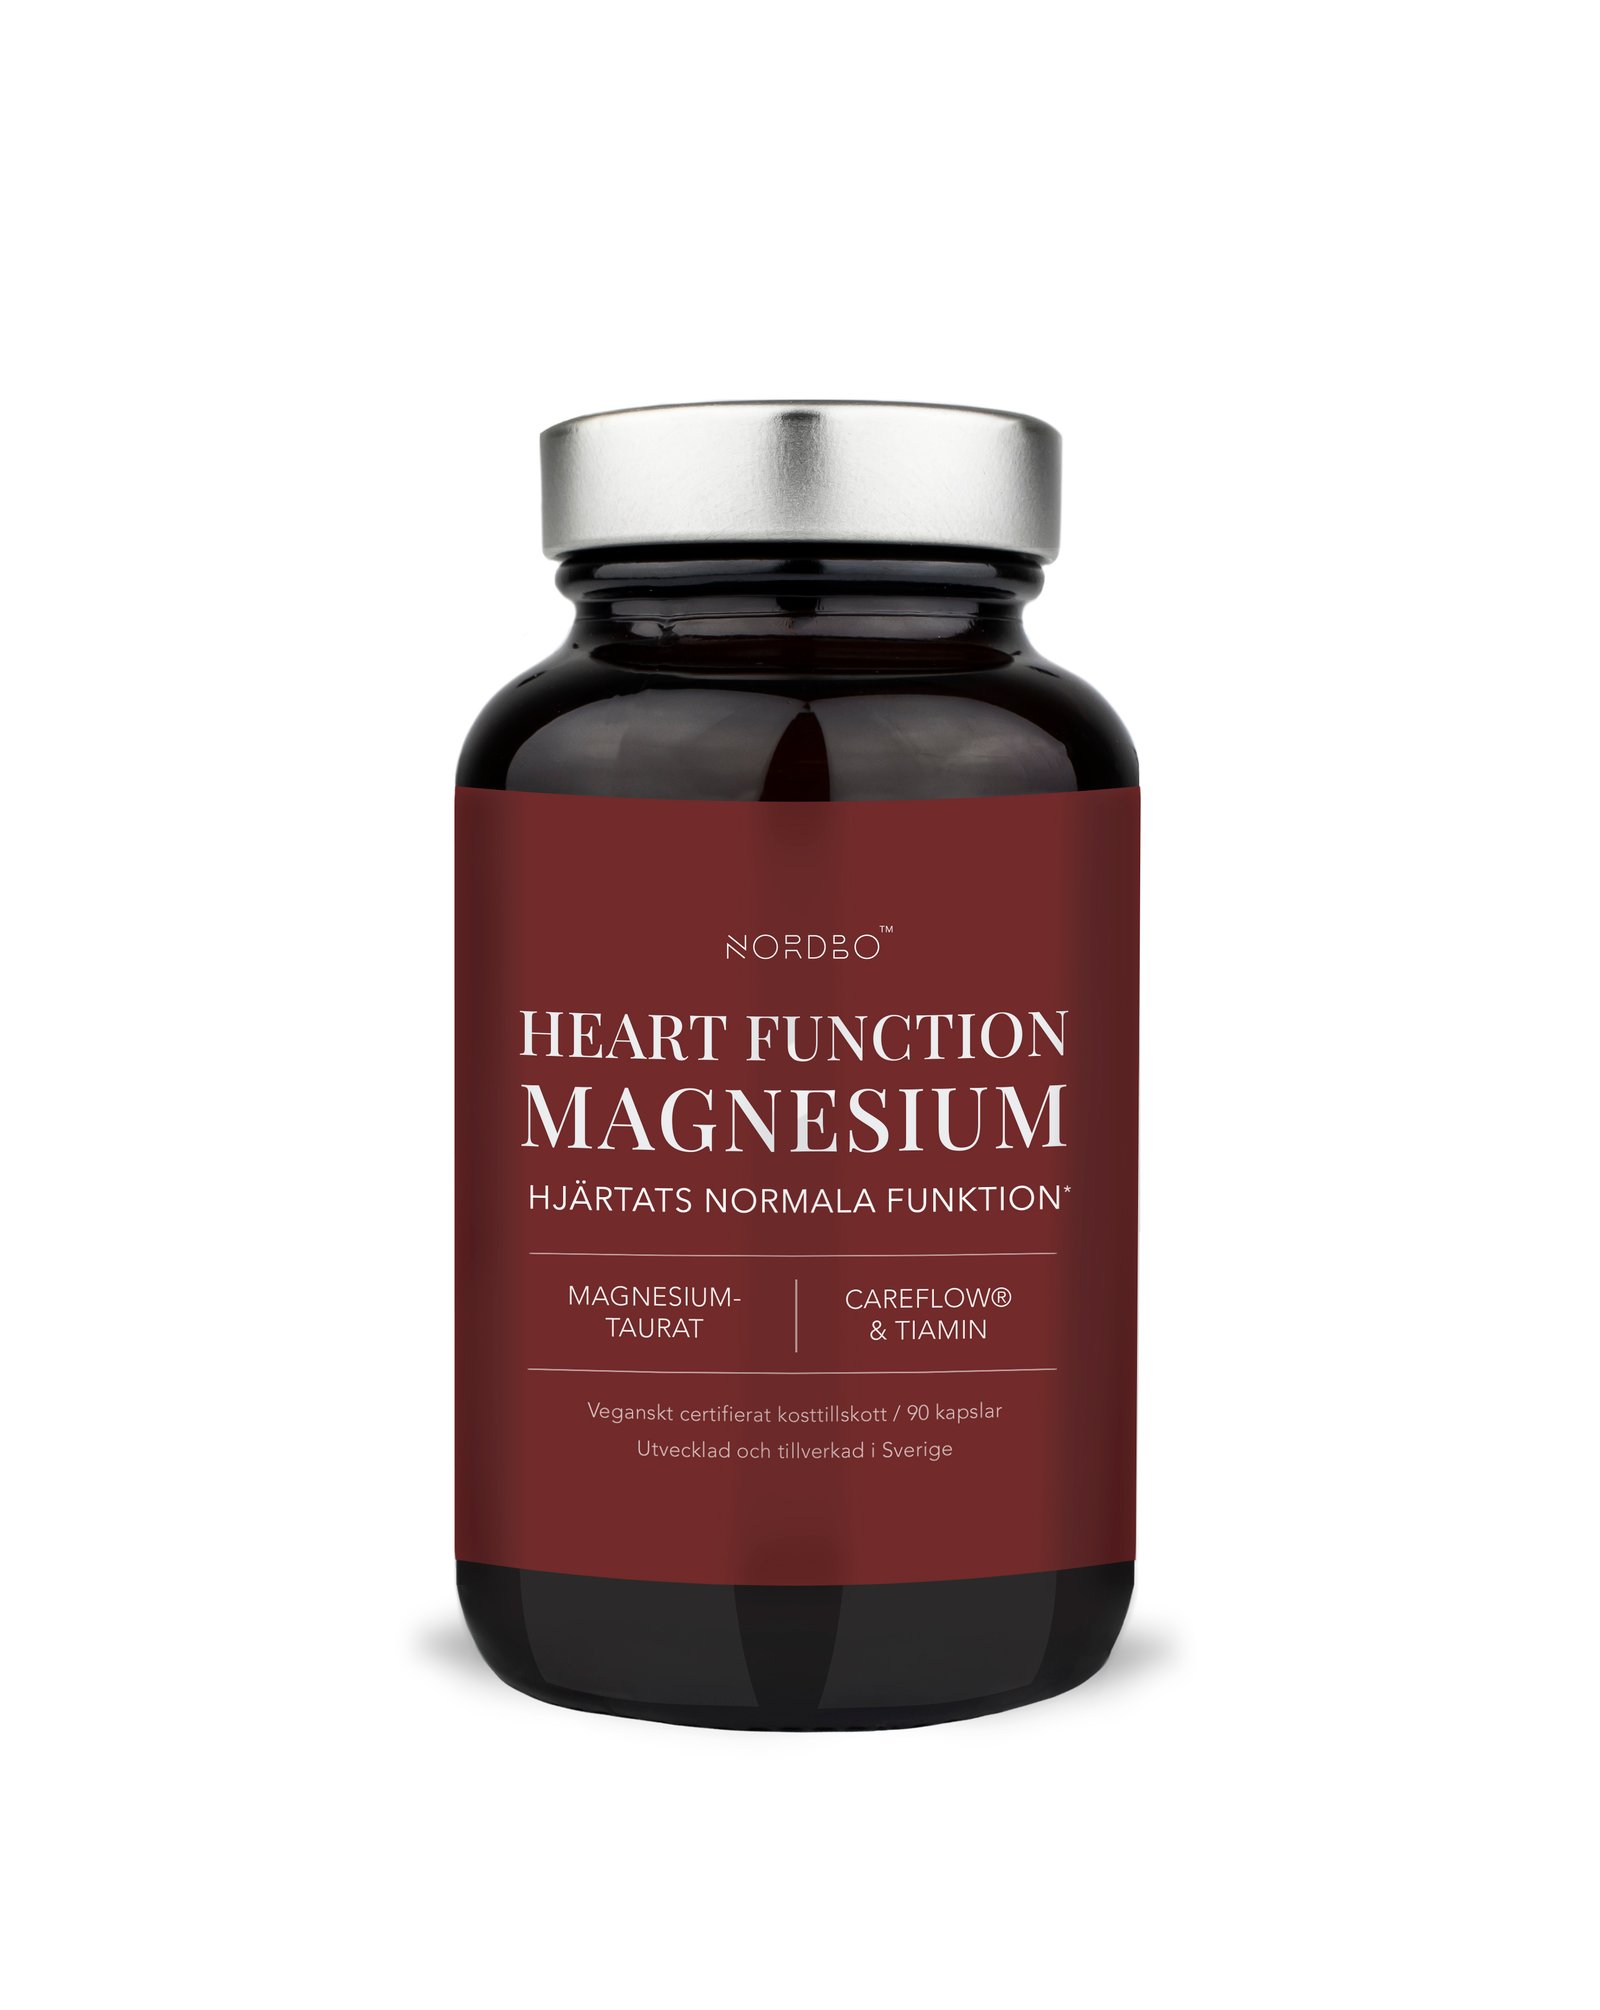 Nordbo Heart Function Magnesium 90 kapslar